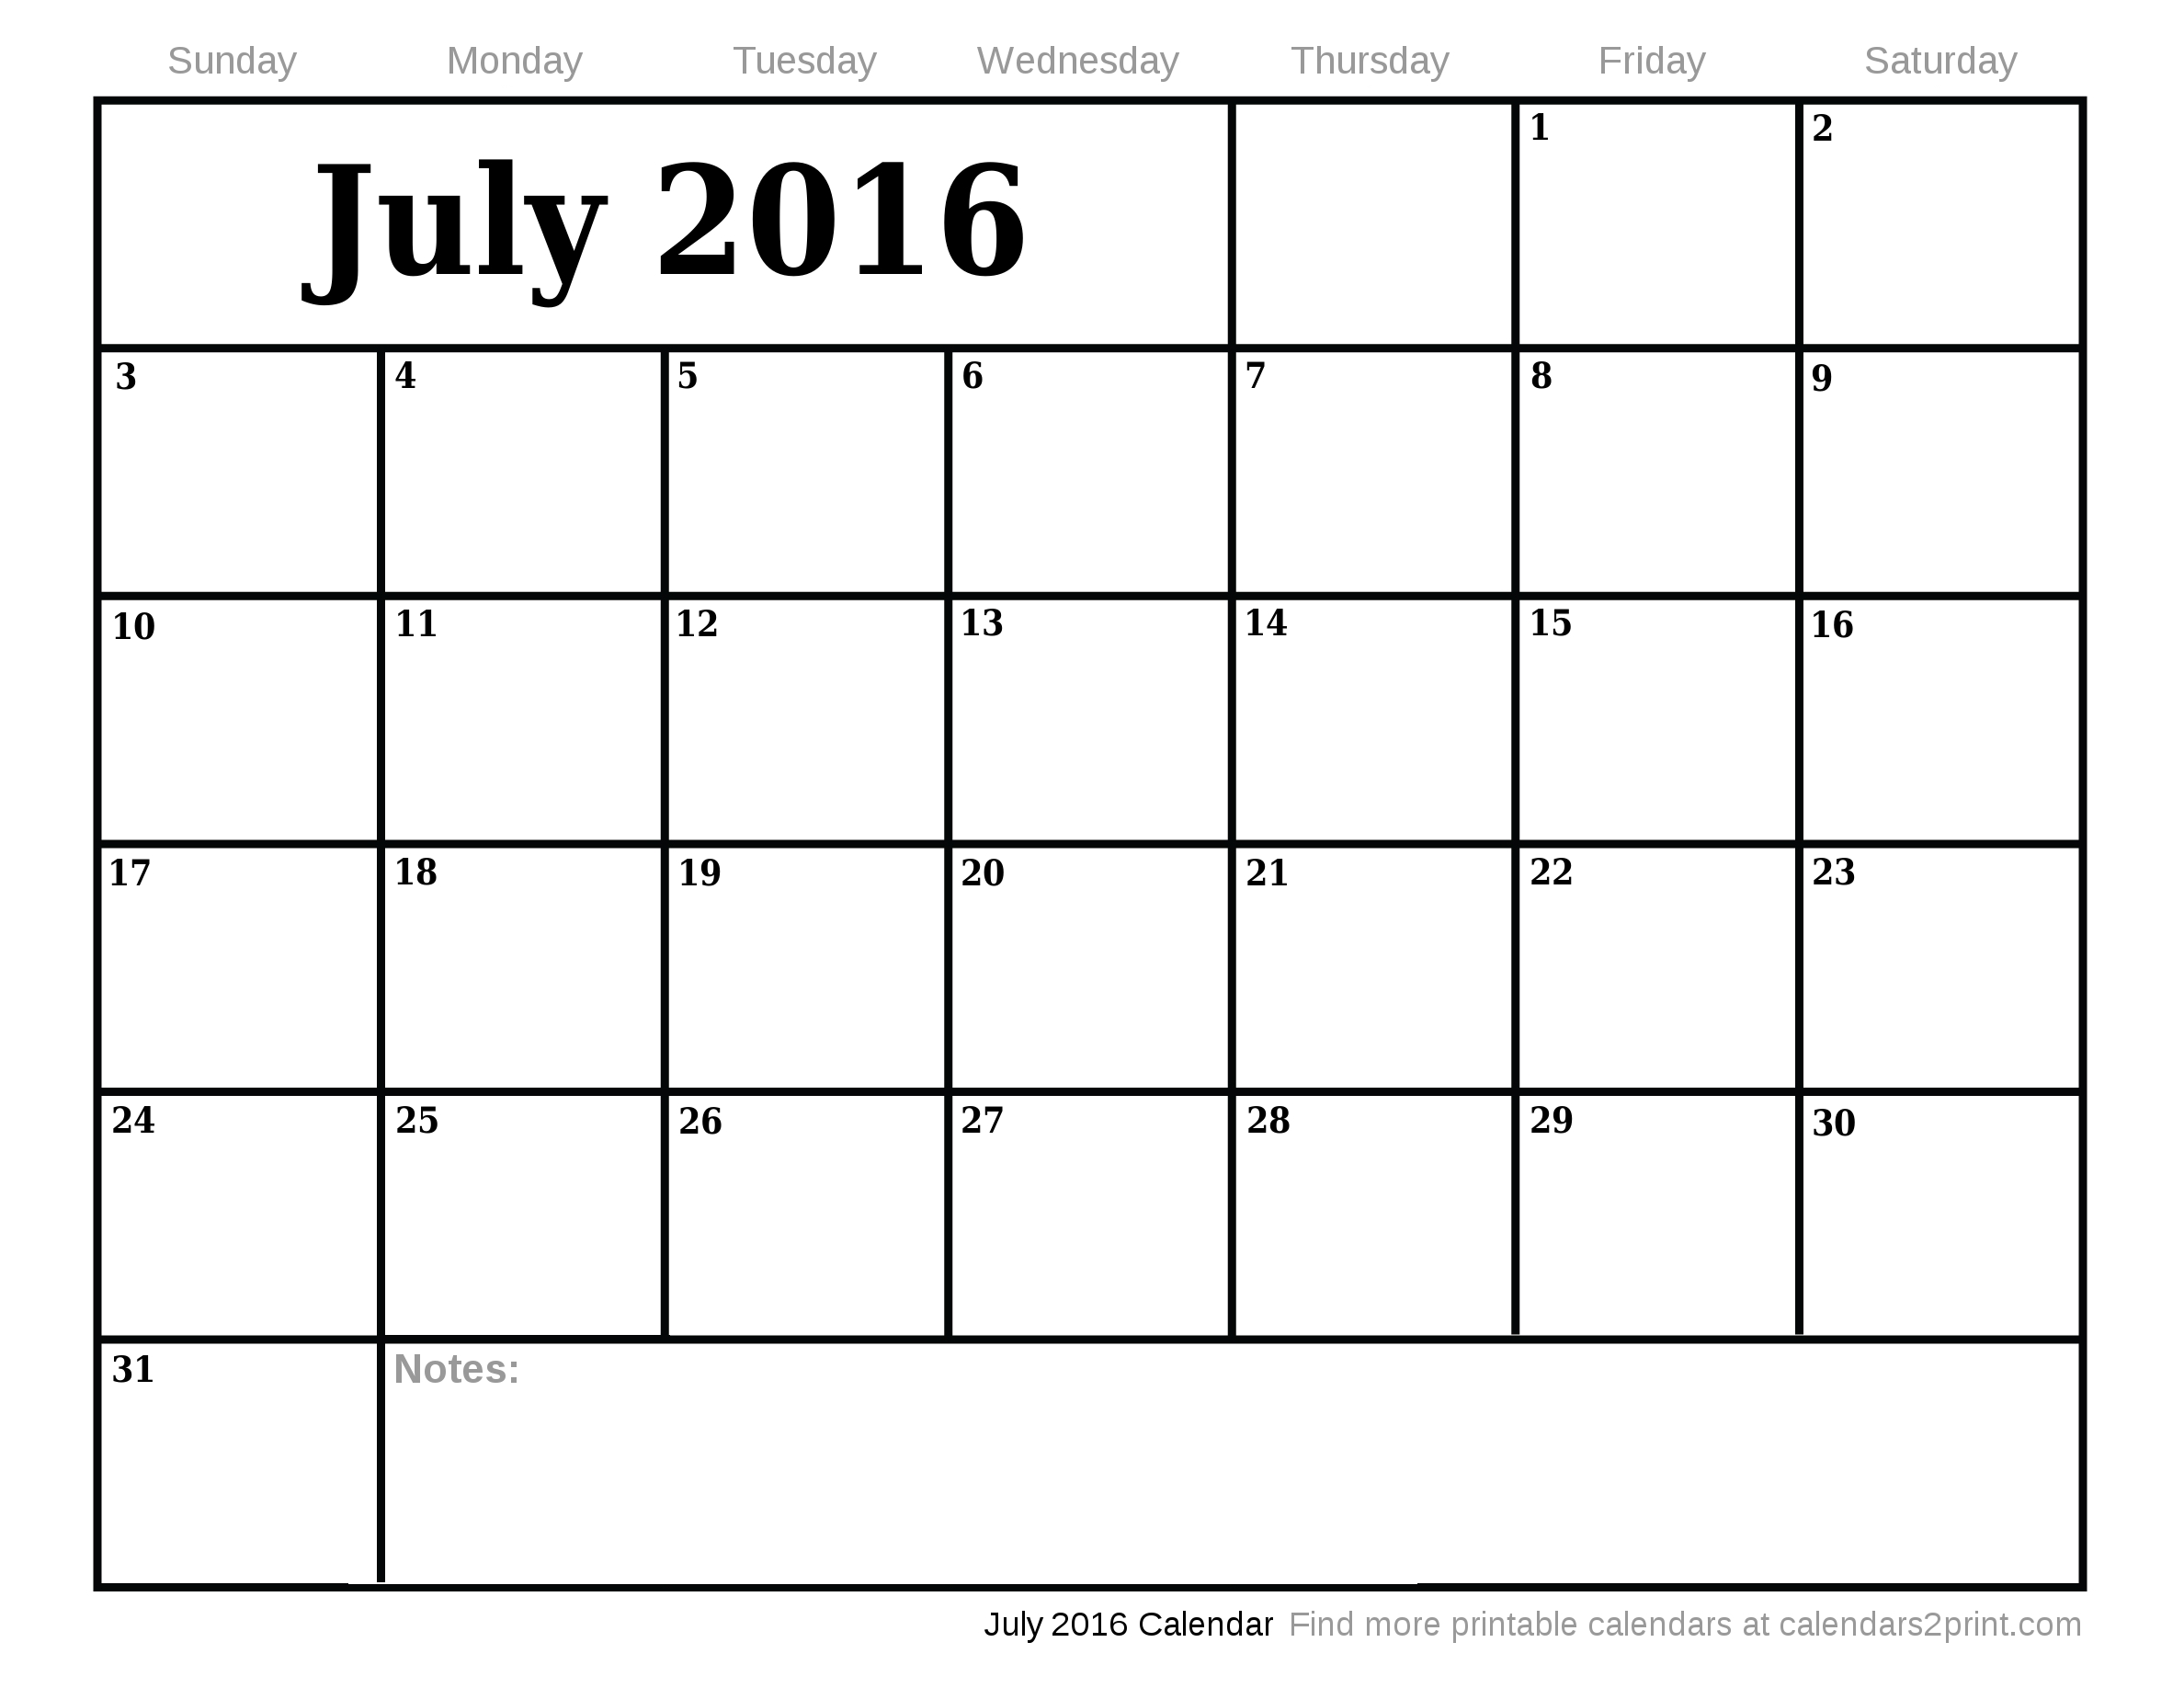 Jul 2016 Printable Calendar